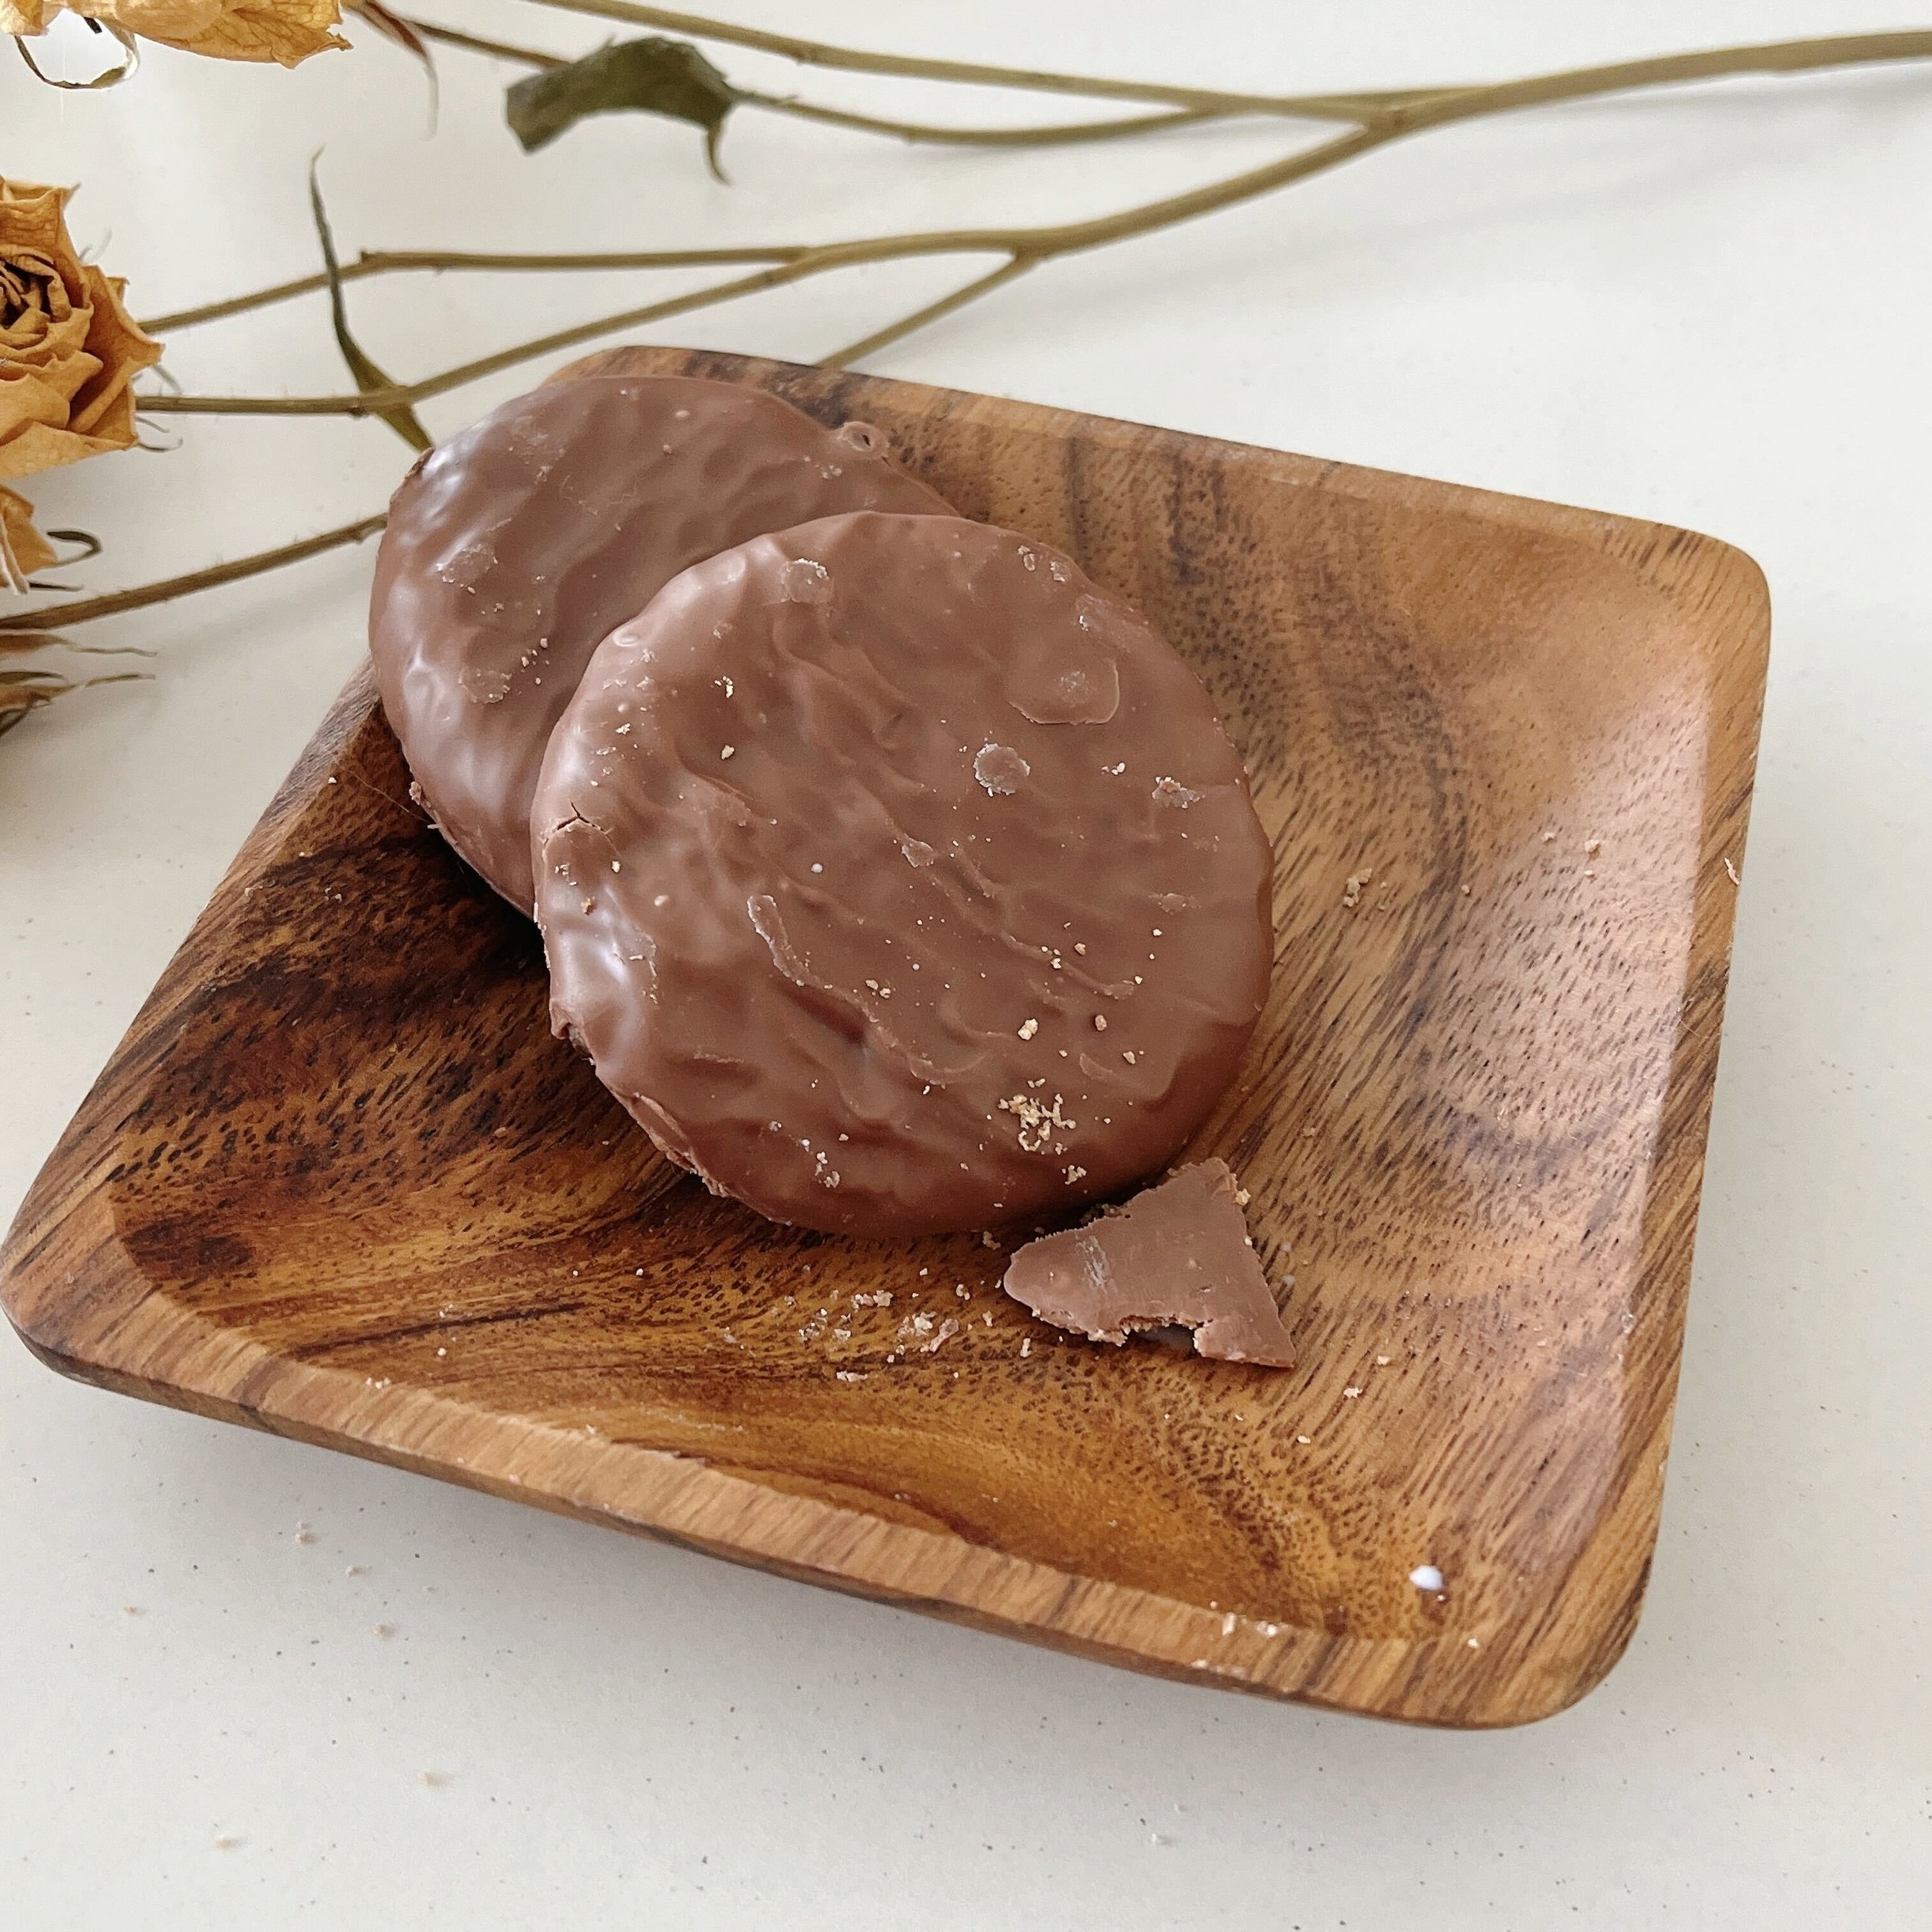 KALDI（カルディ）のオススメチョコスイーツ「メルバ リッチミルクチョコレートクッキー 180g」